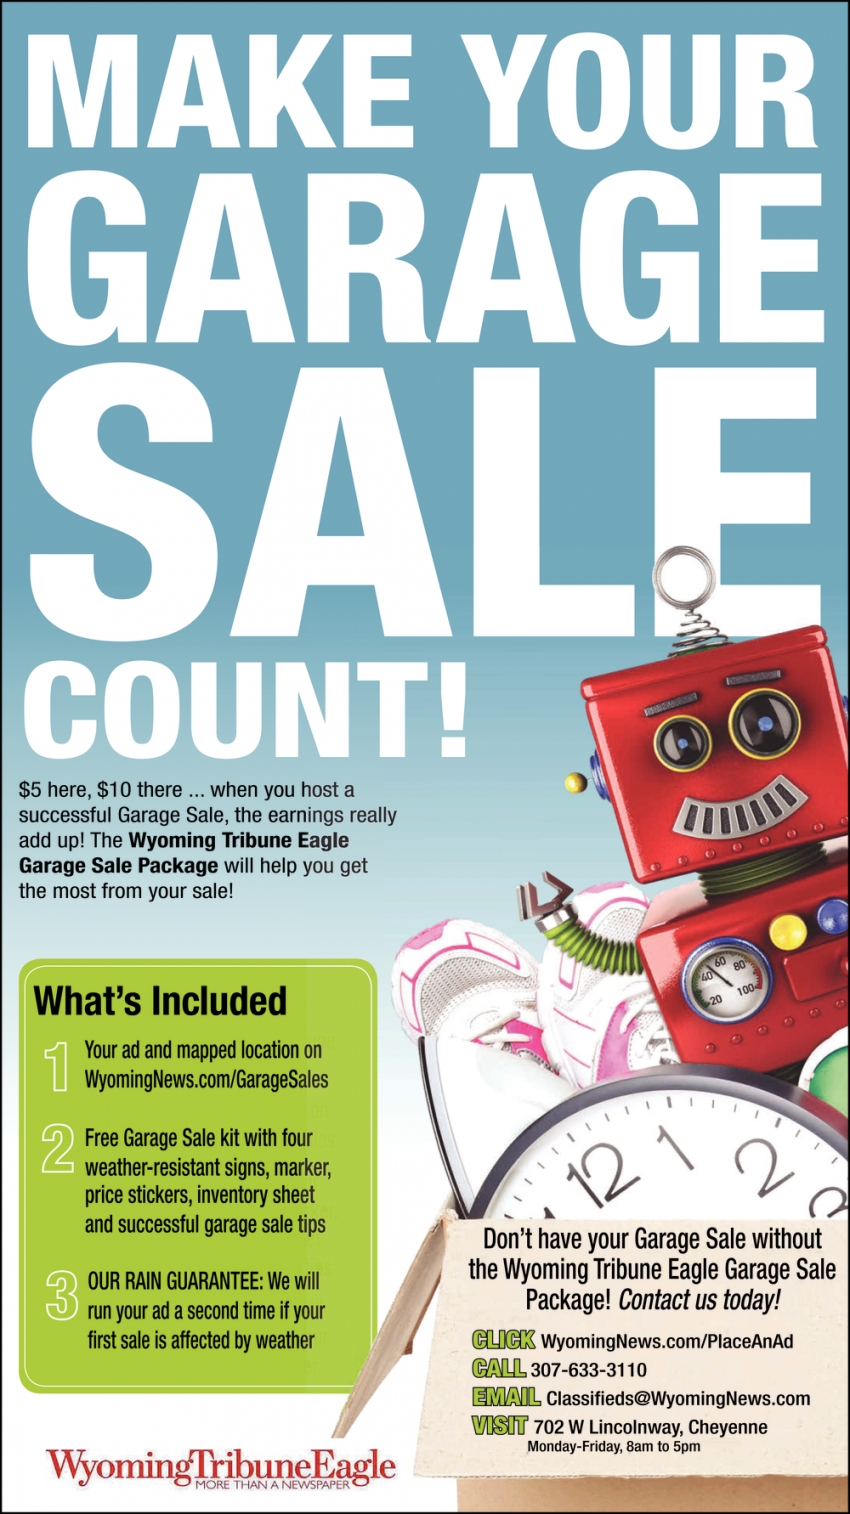 Make Your Garage Sale Count!